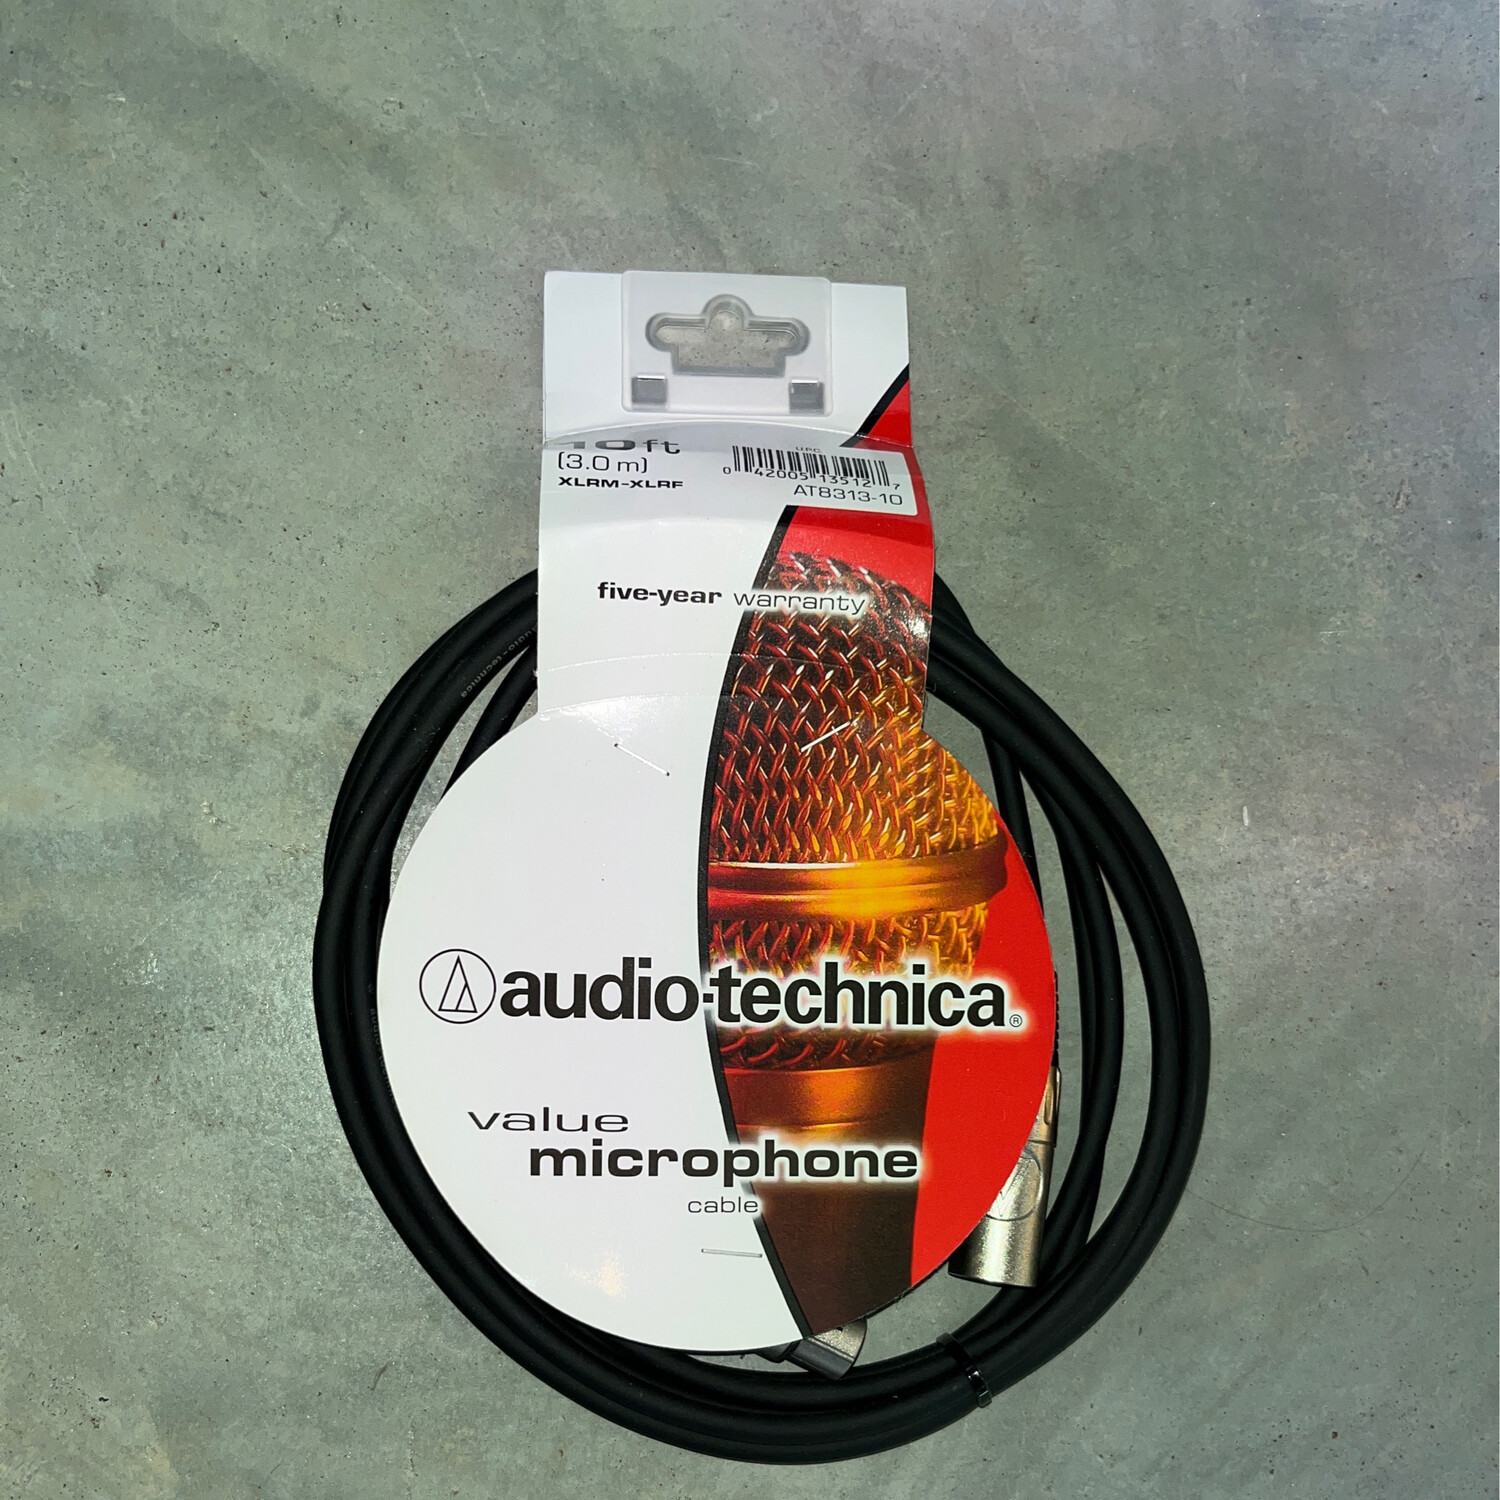 Audio-technica XLR 10FT Cable